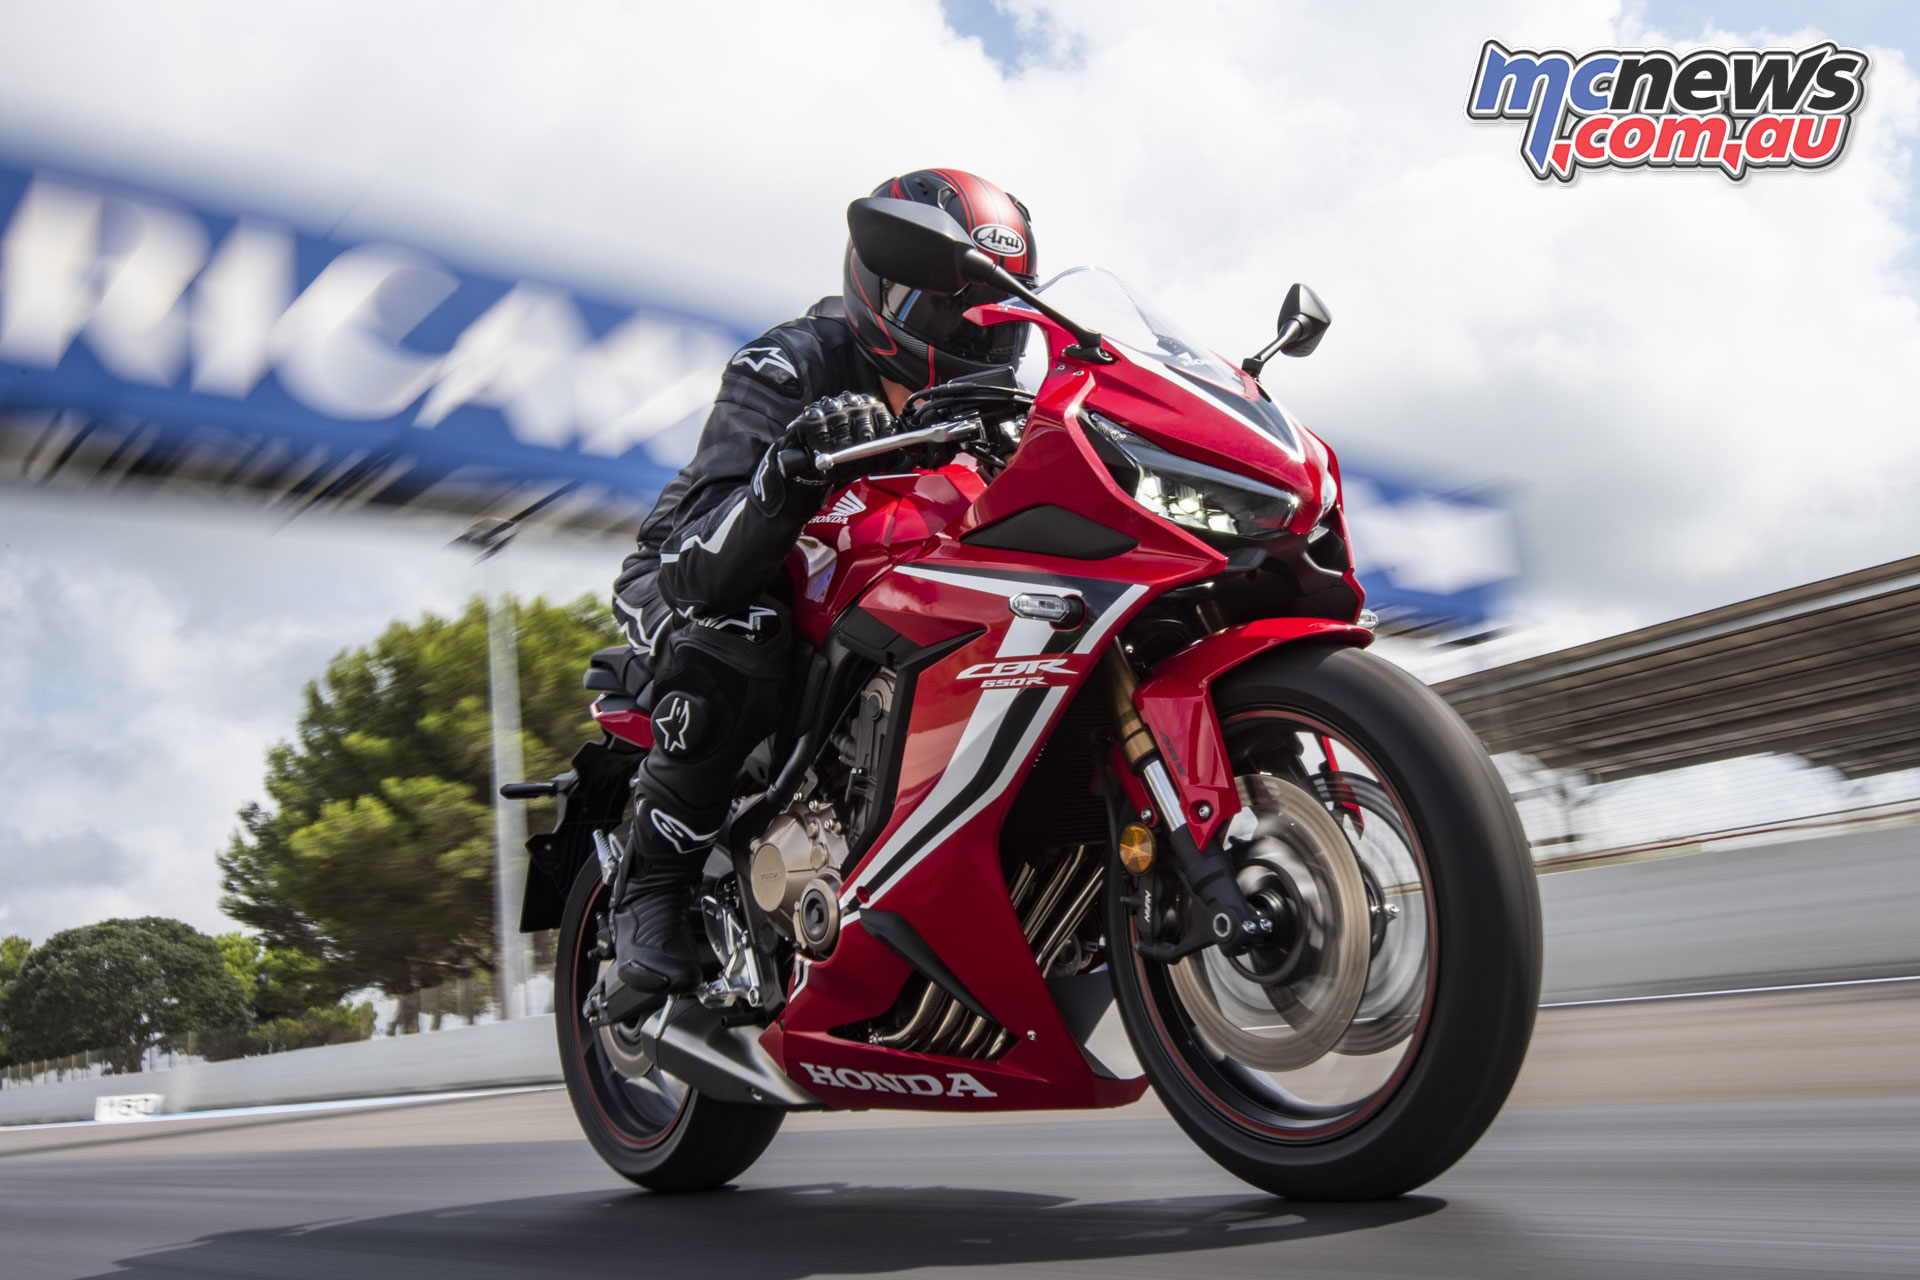 19 Honda Cbr650r Fireblade Styling Lams 6kg Motorcycle News Sport And Reviews